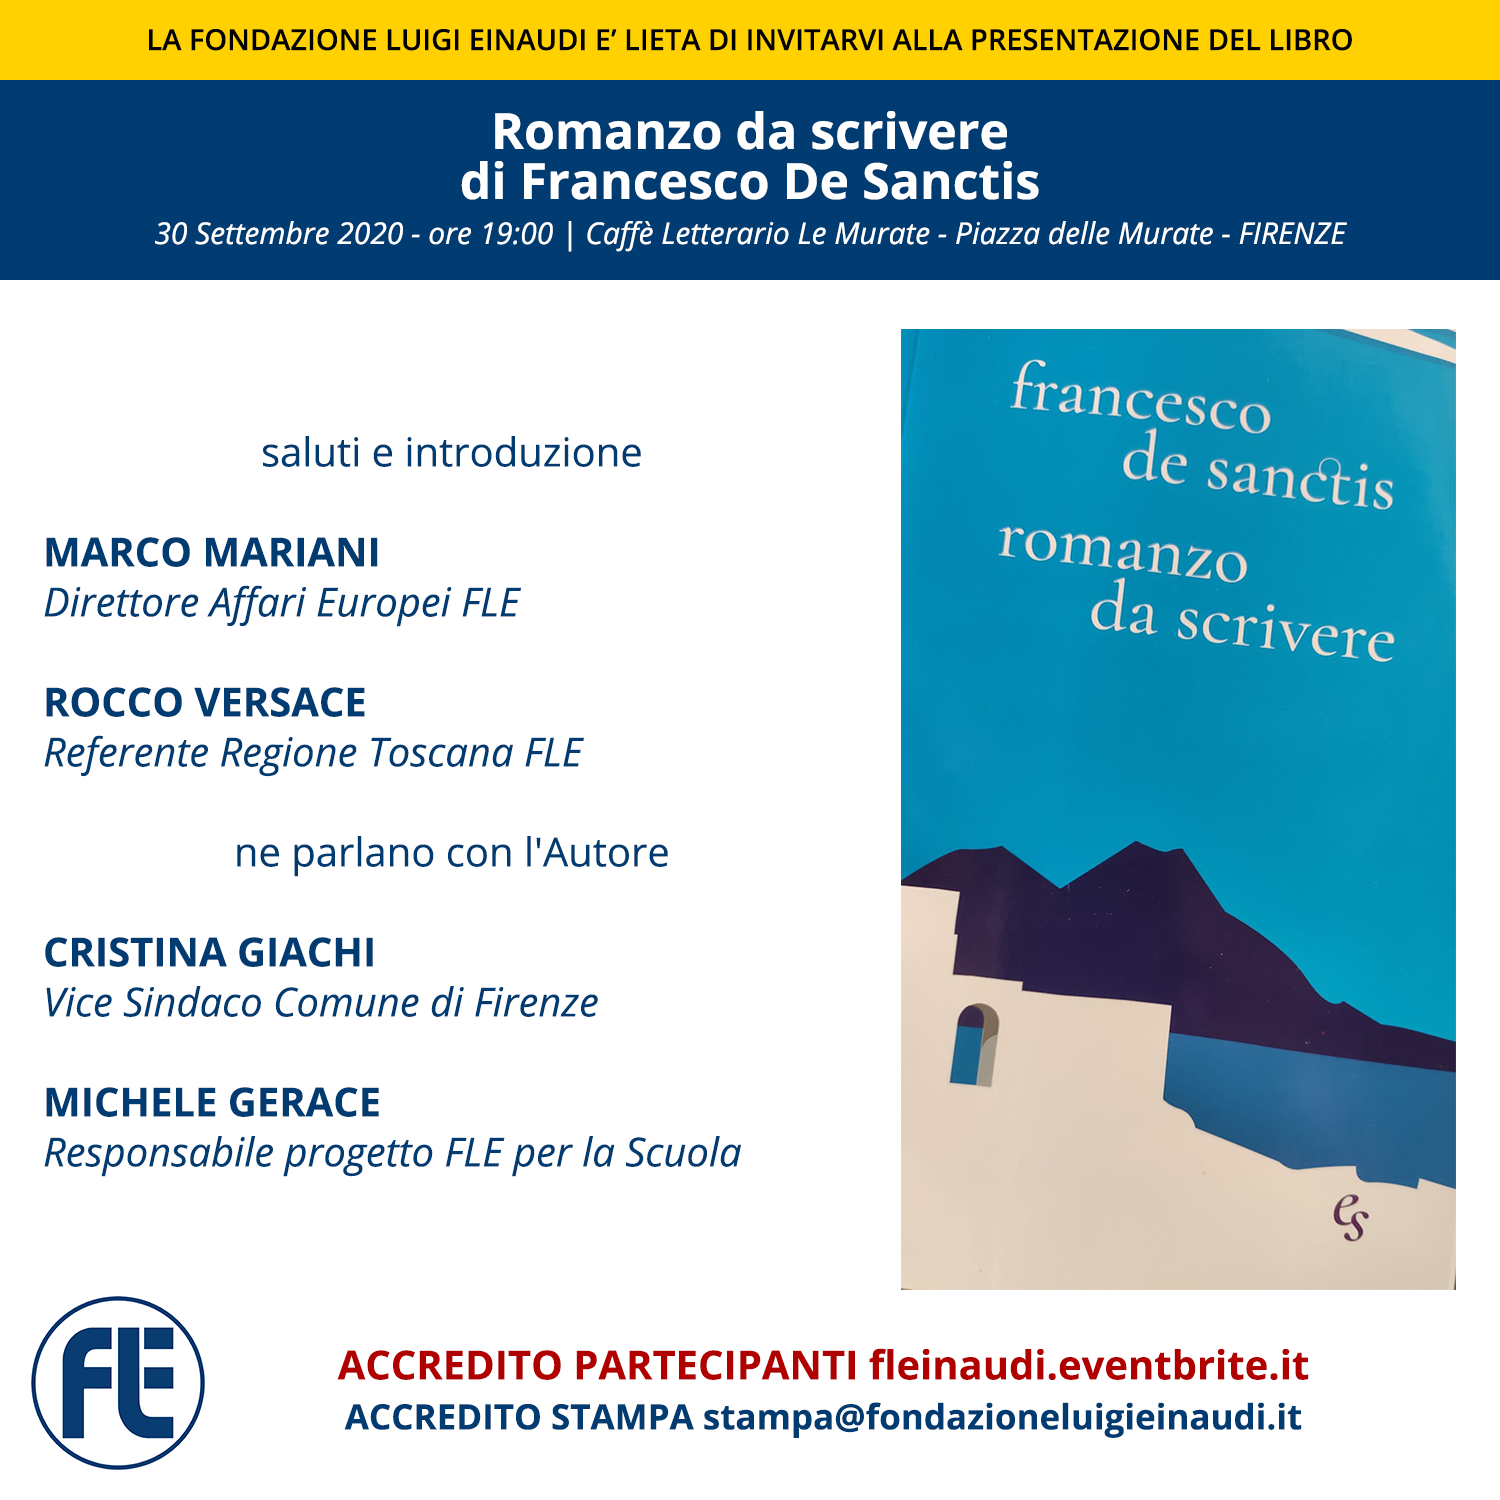 Presentation of the book “Romanzo da Scrivere”, author Francesco de Sanctis